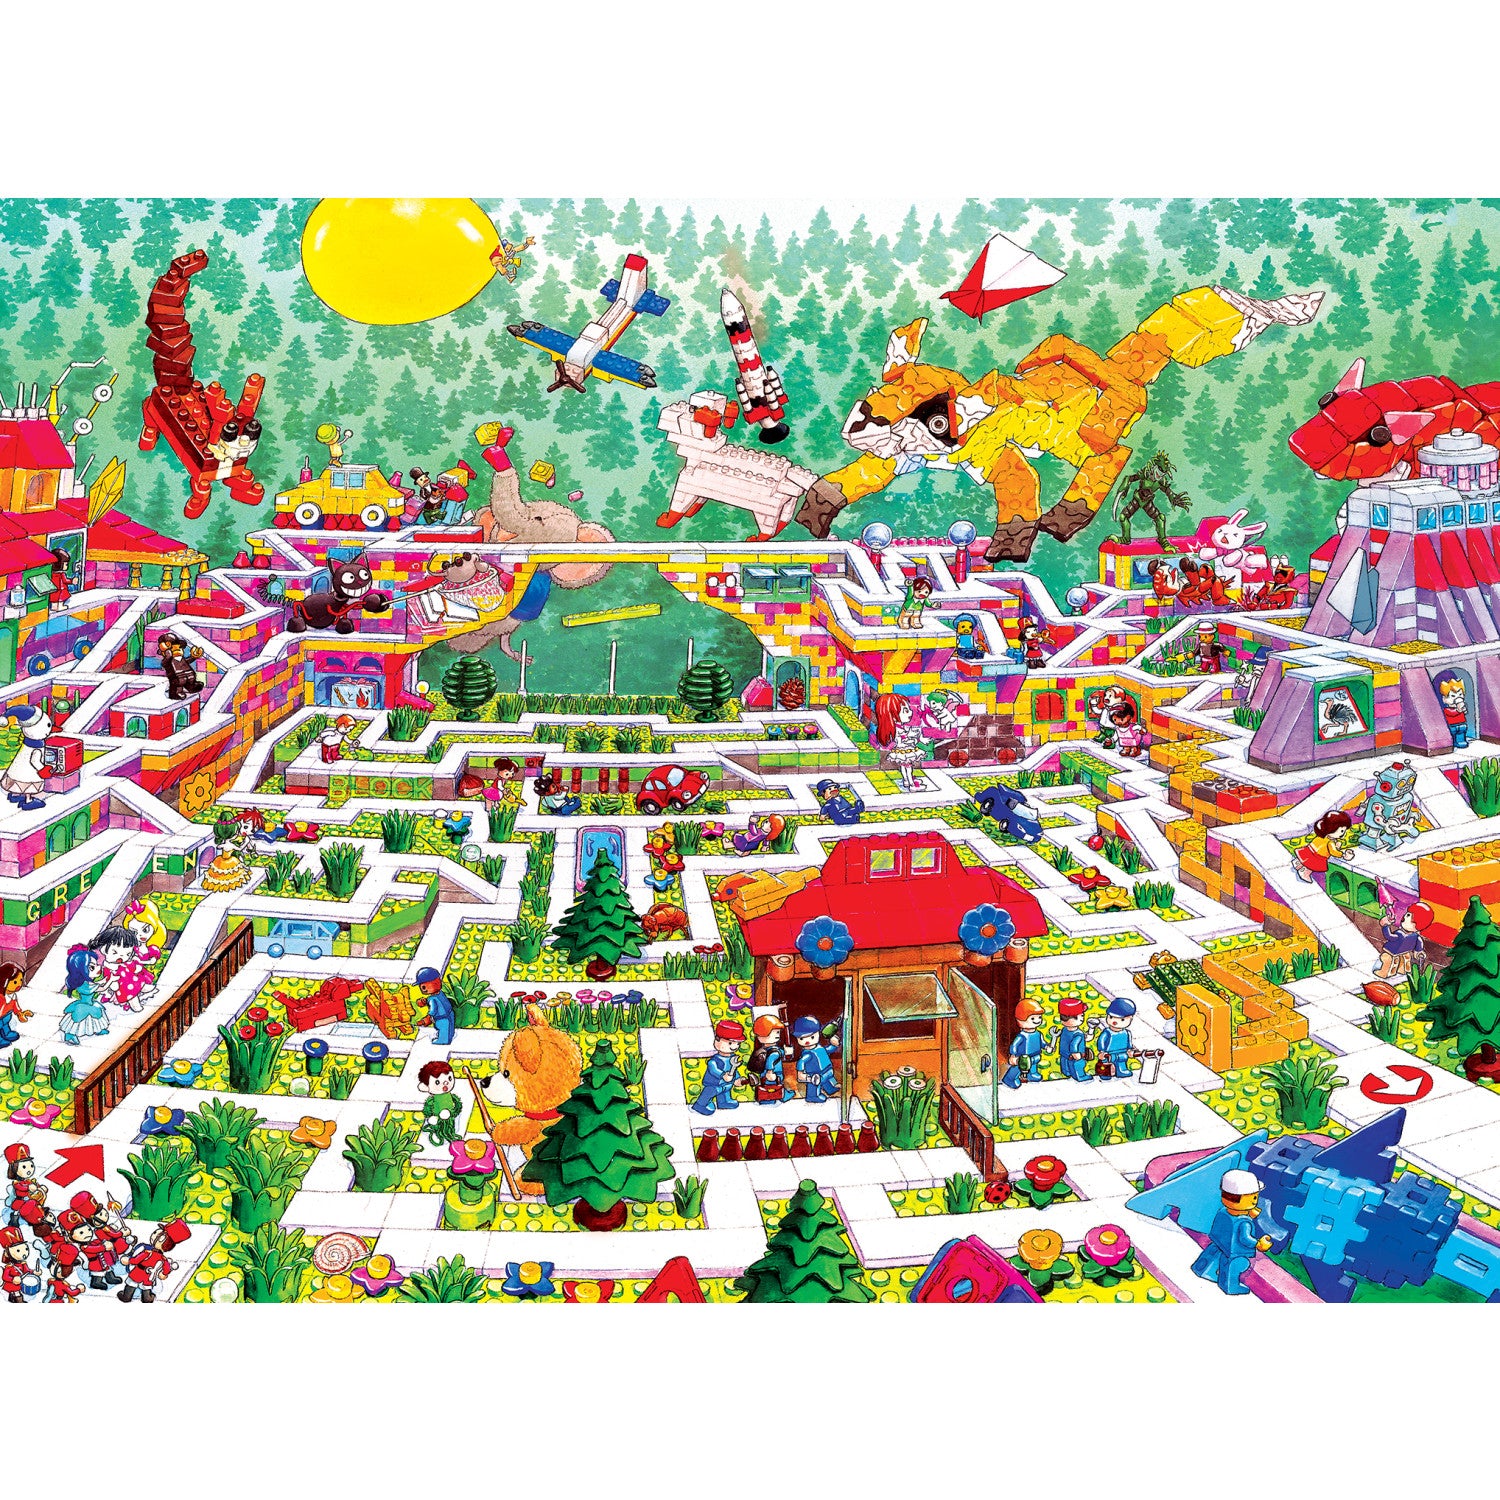 A-Maze-ing - Toy Blocks 200 Piece Puzzle